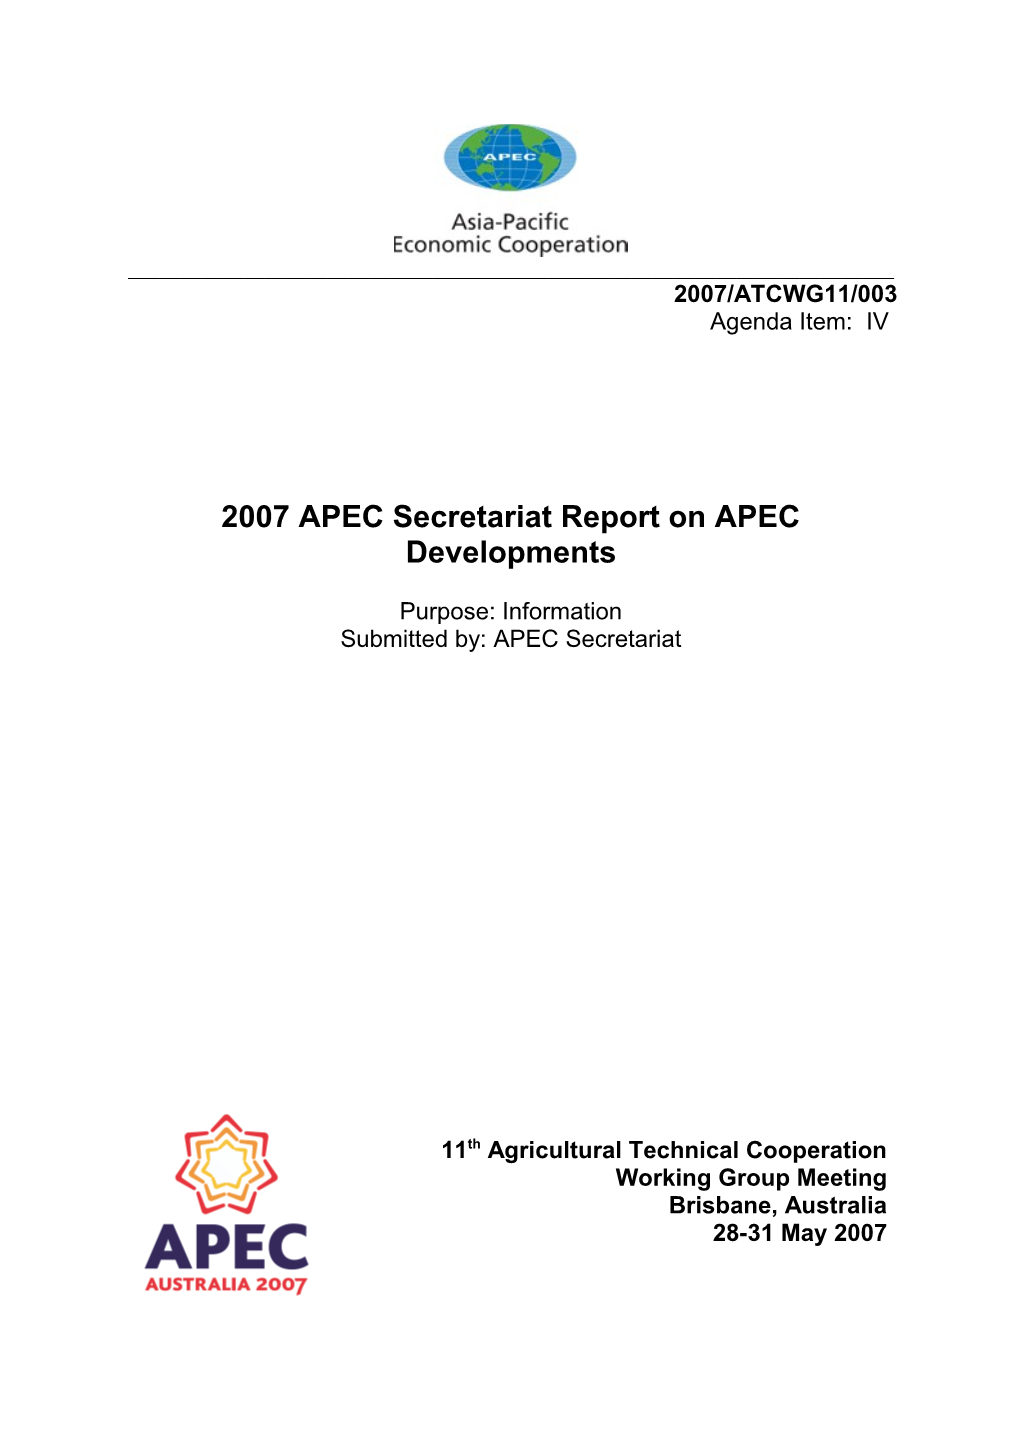 Report on APEC Developments